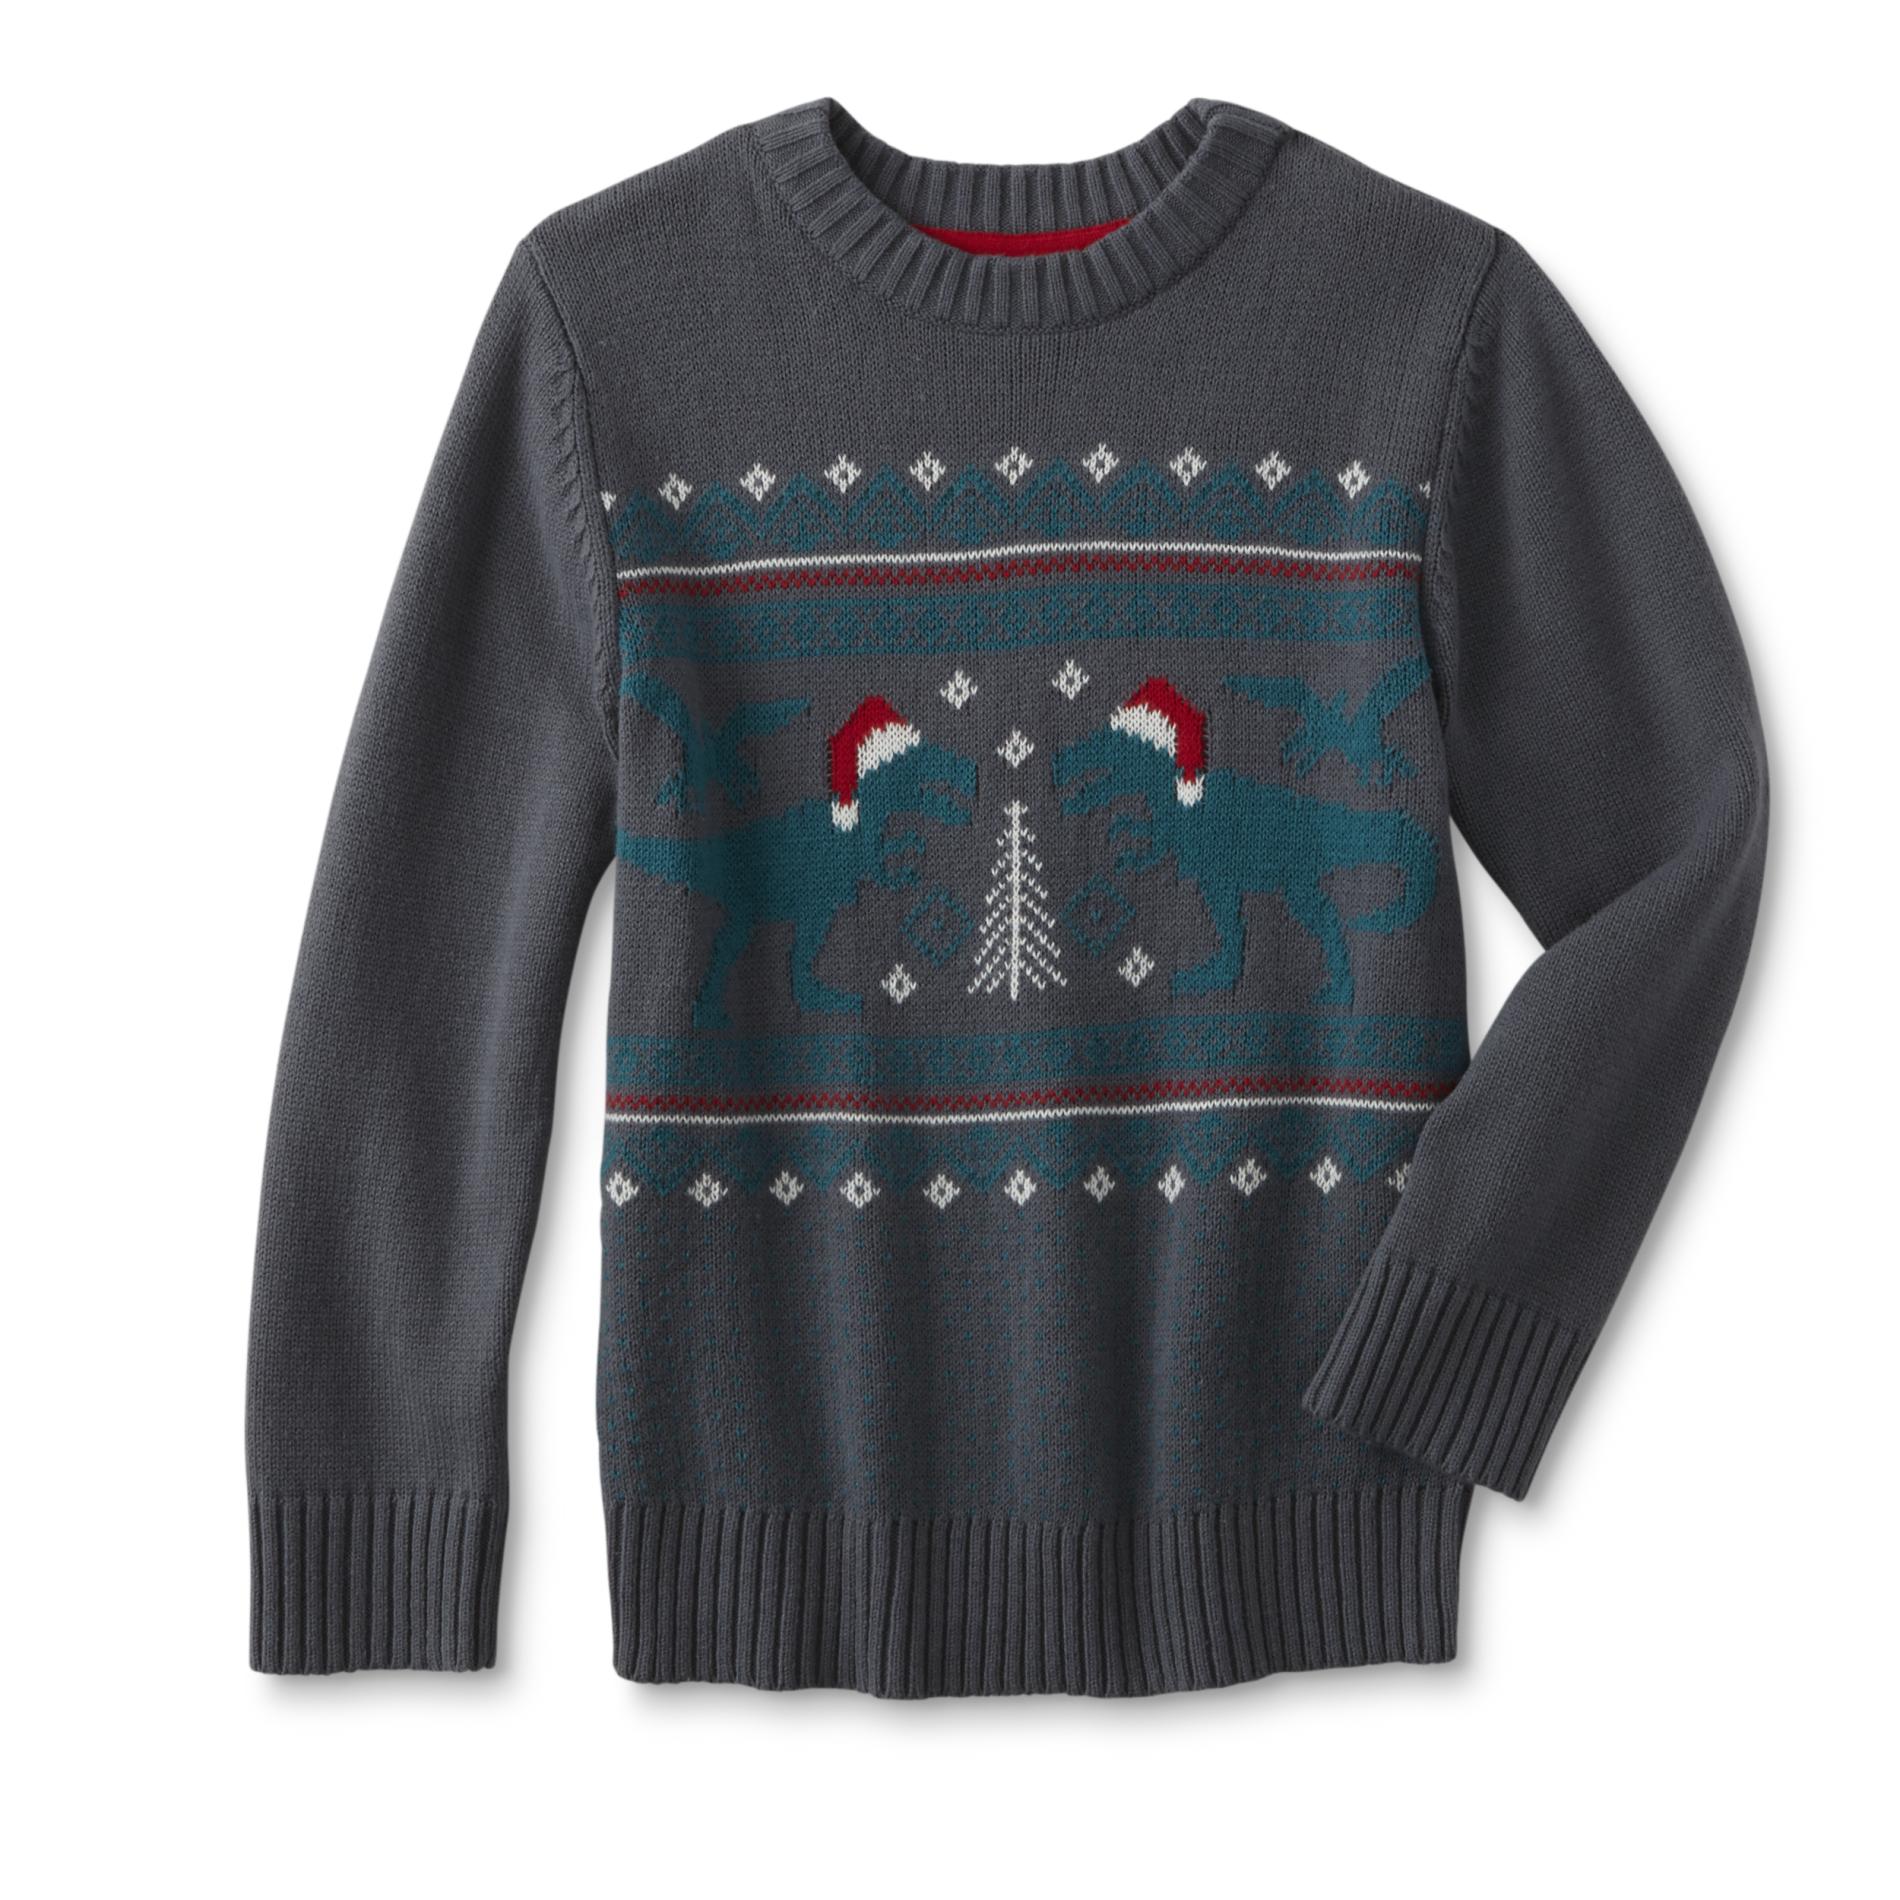 Toughskins Boys' Holiday Sweater - Festive Dinosaurs